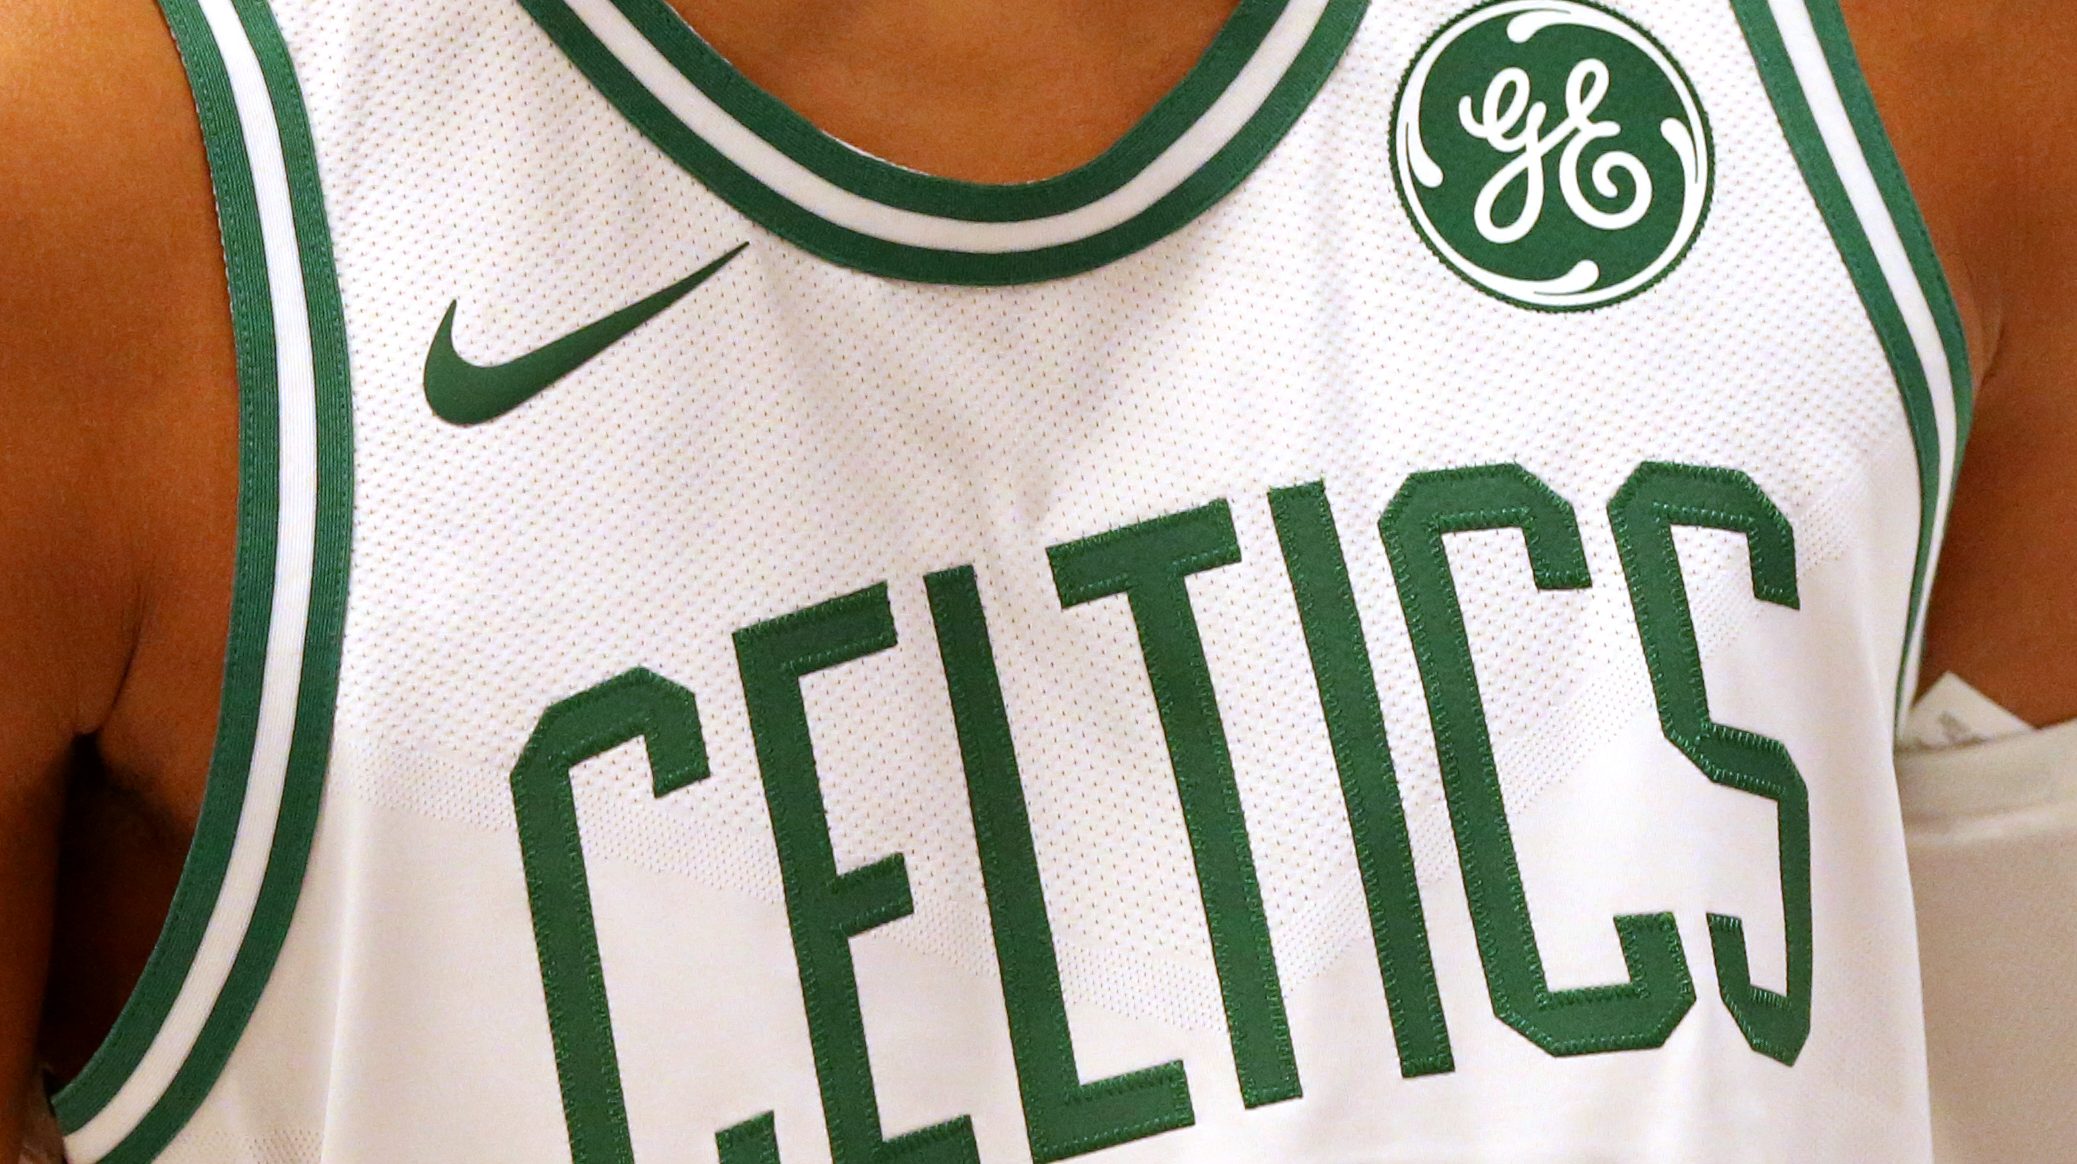 Celtics, GE announce jersey sponsorship deal - Front Office Sports